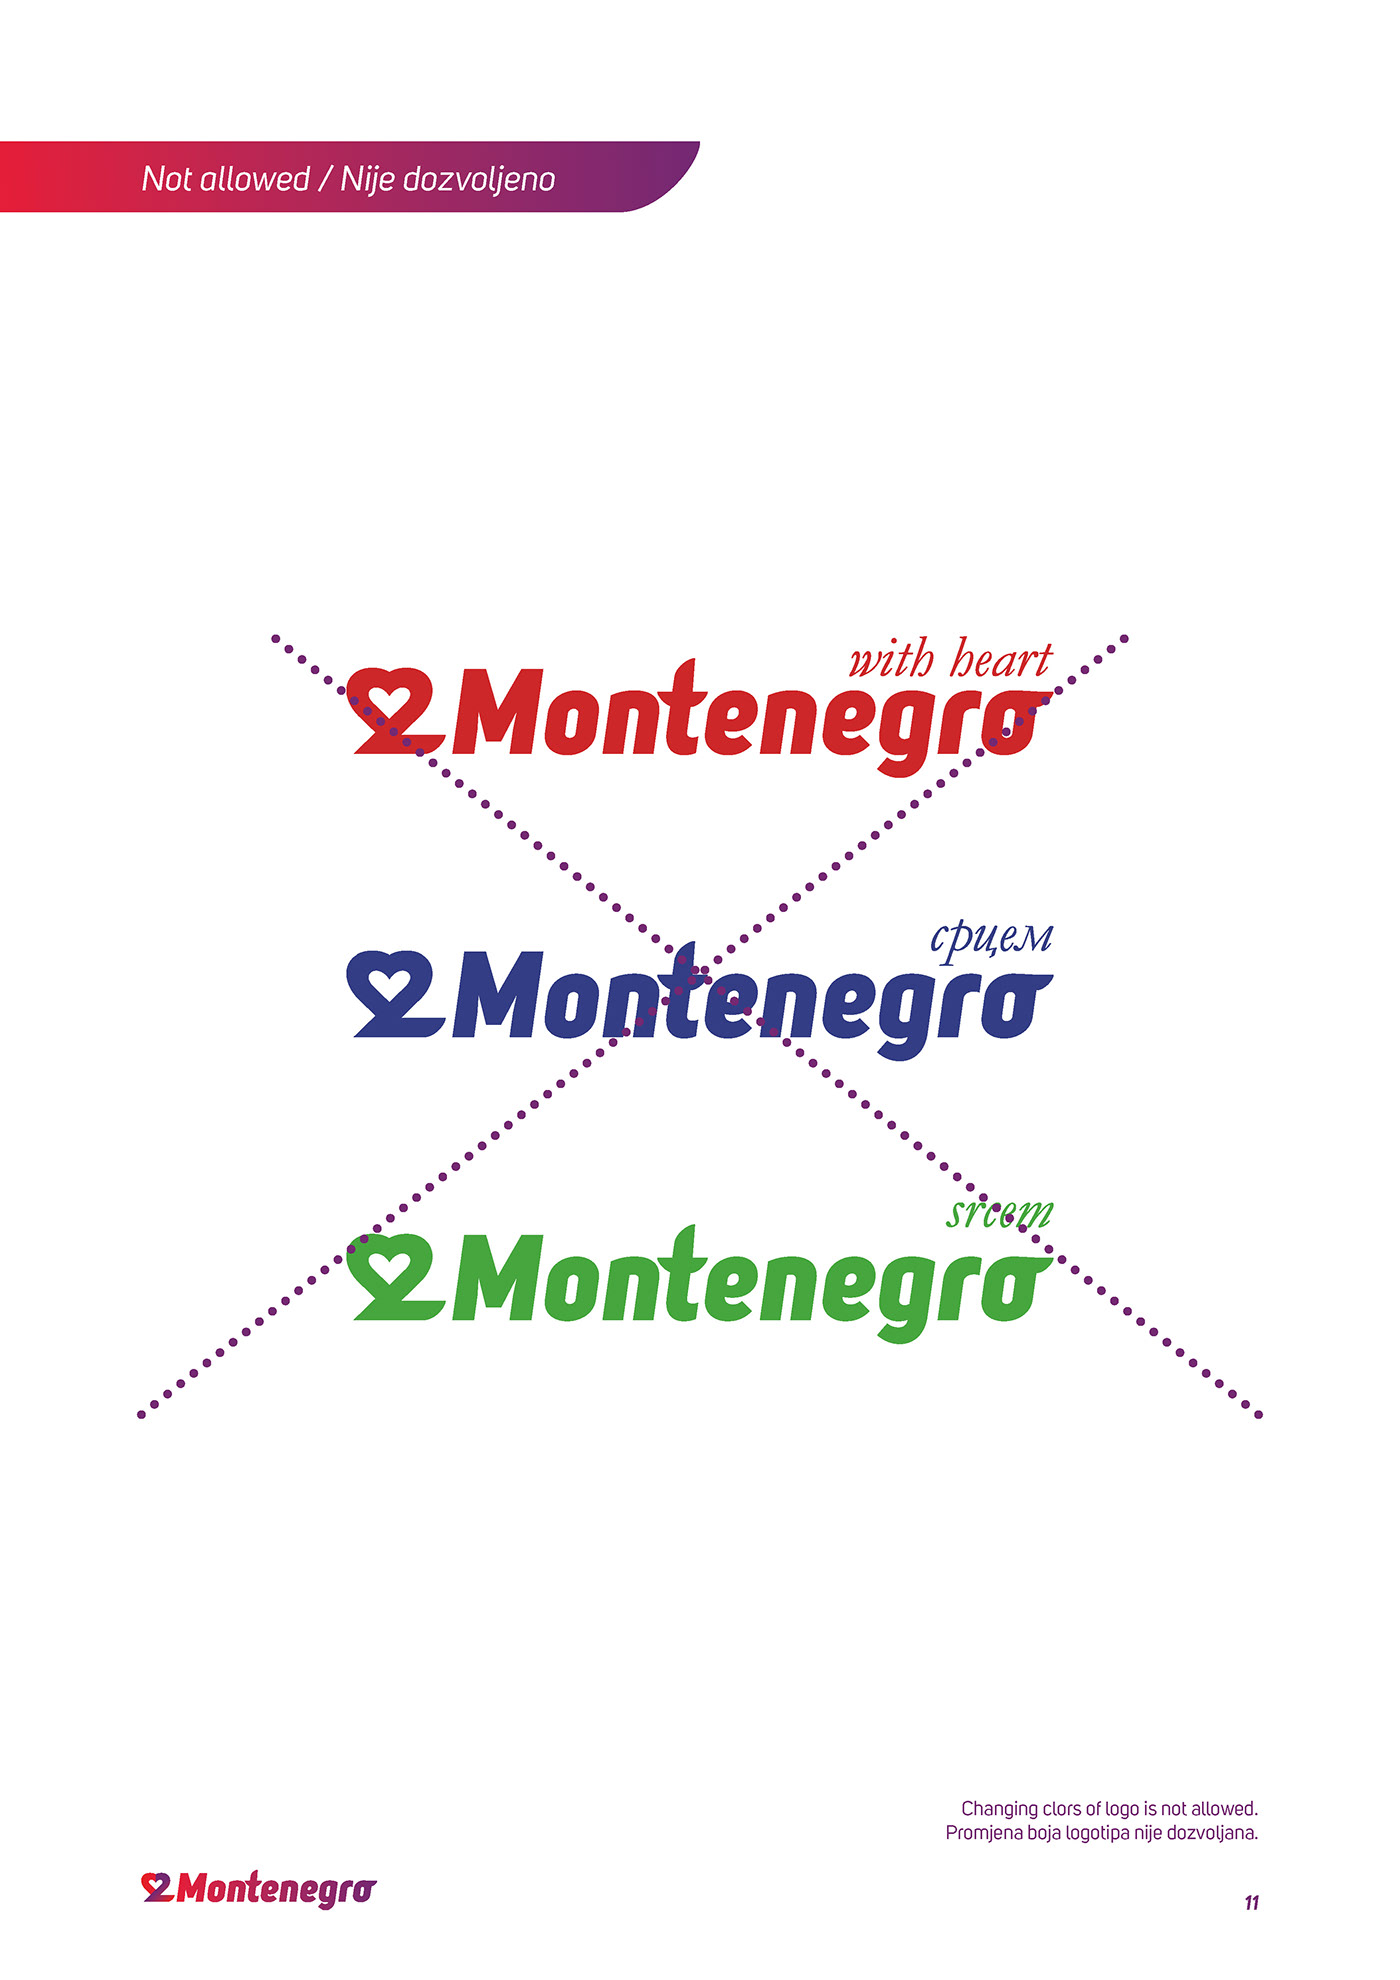 2montenegro airline Airlines airmontenegro airplane heart montenegro Montenegro Airlines SKY with heart